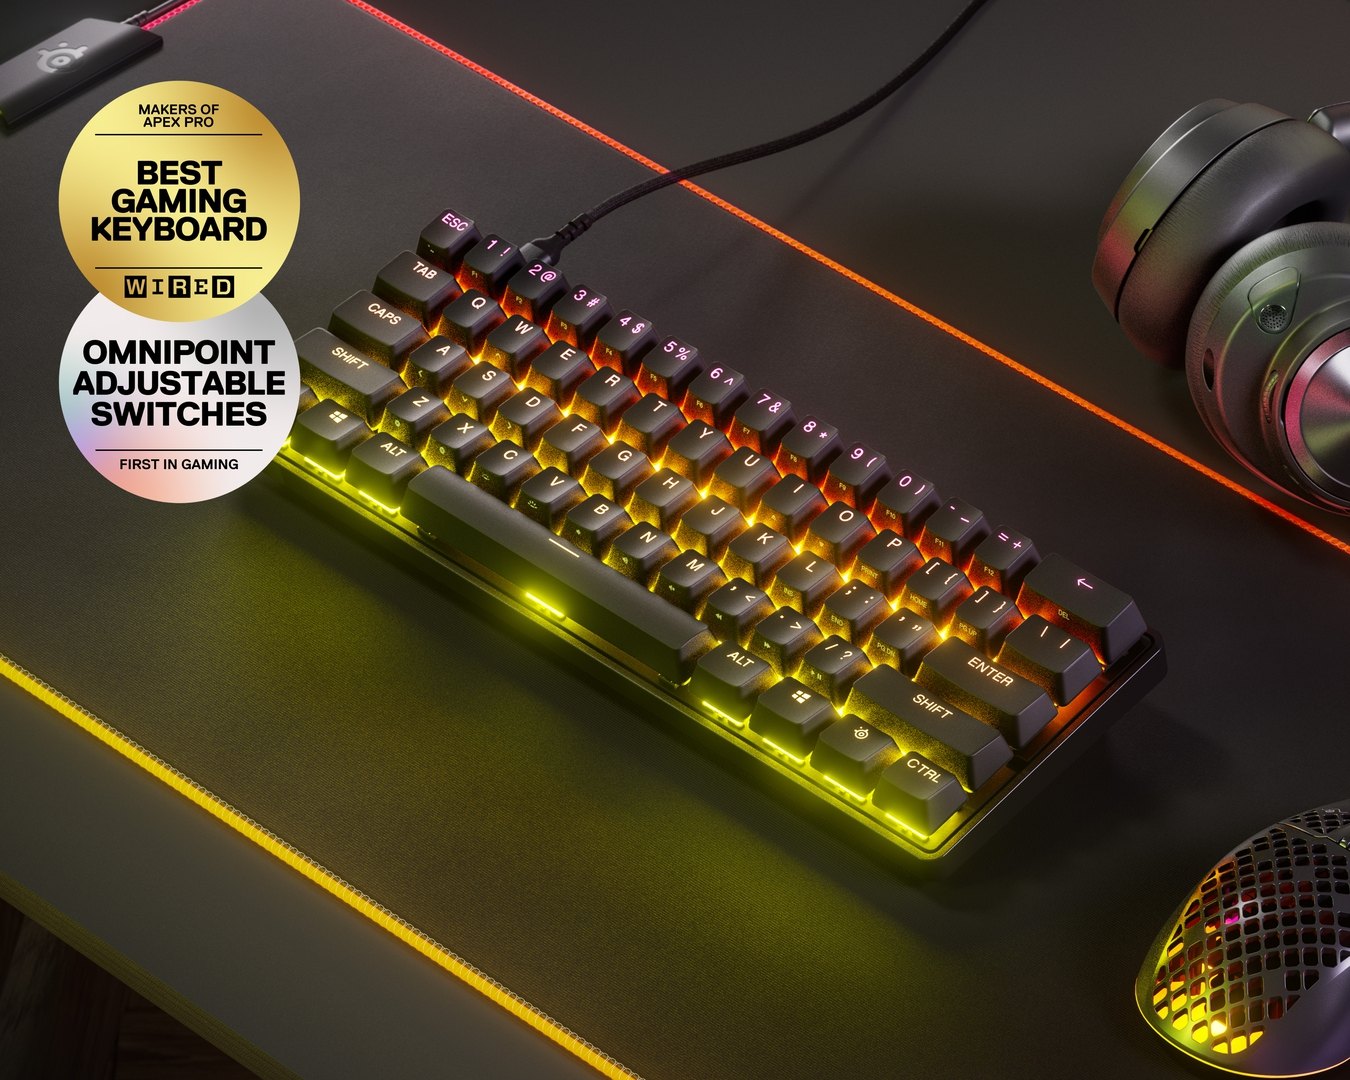 SteelSeries APEX 9 Mini 60% Mechanical USB RGB Gaming Keyboard